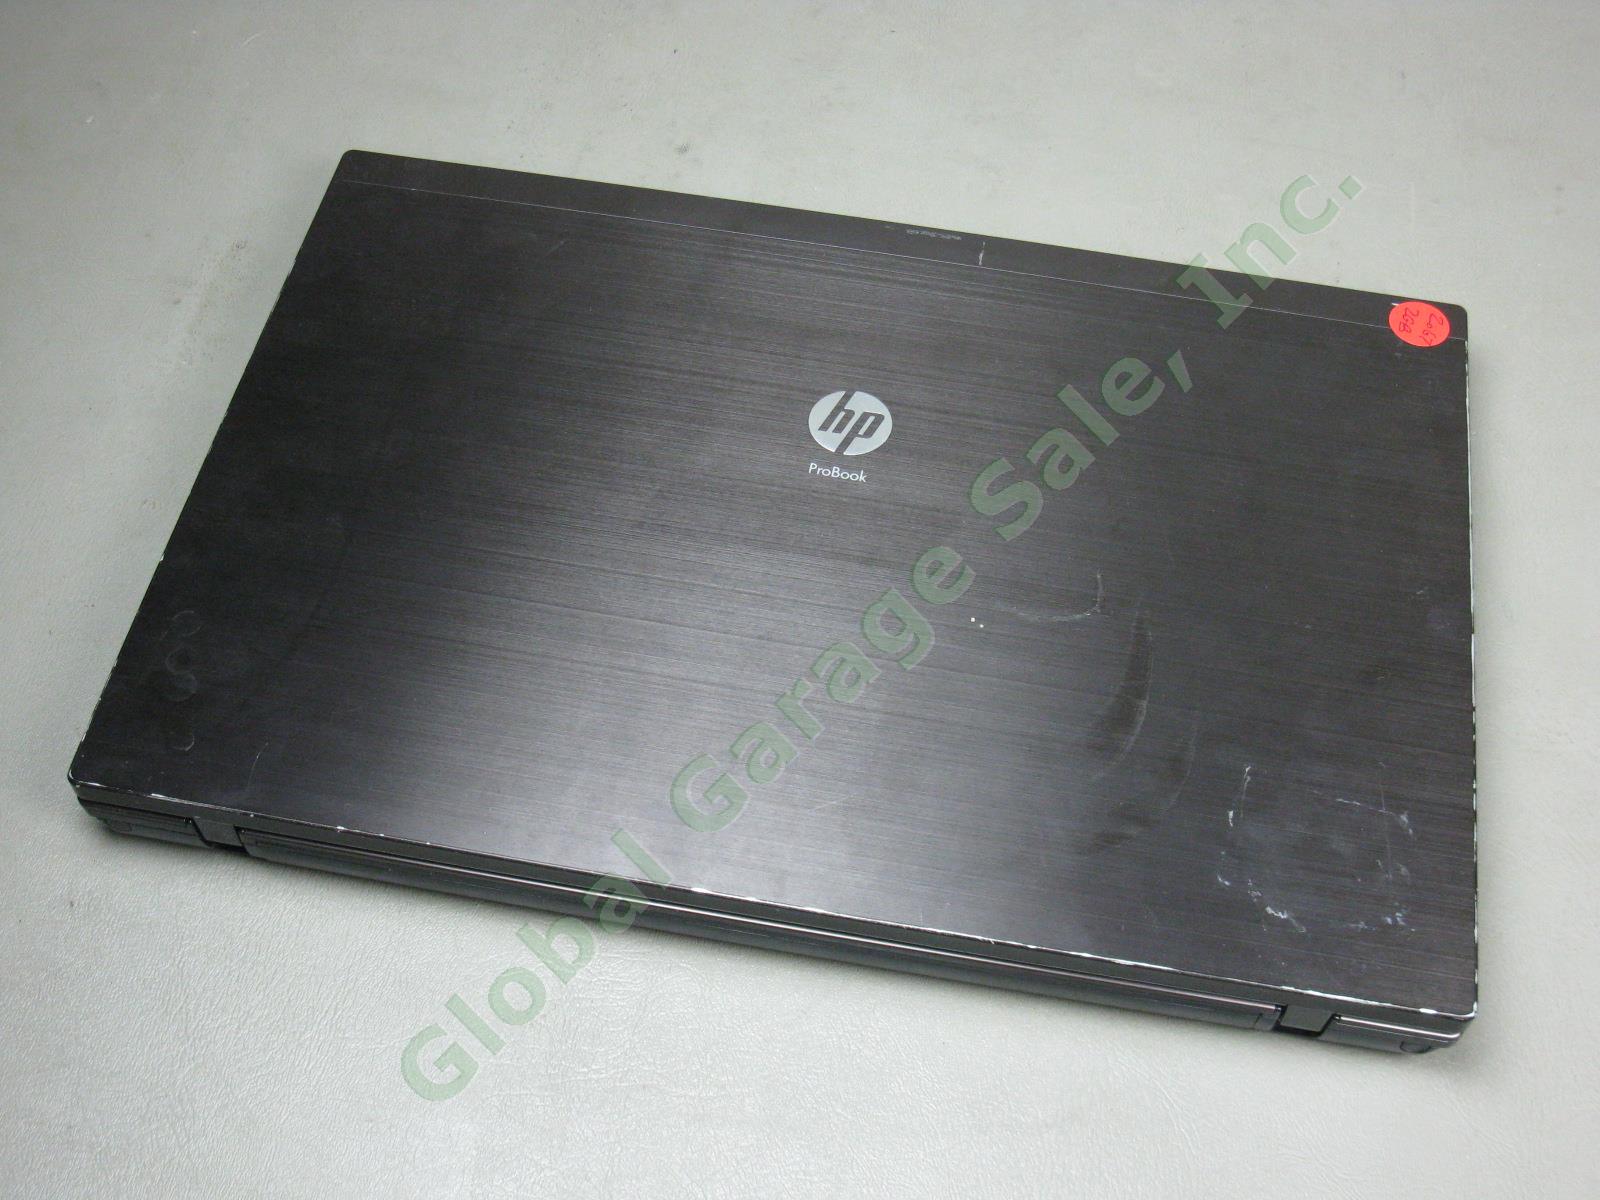 HP 4520s ProBook Laptop Computer Intel Core i5 M560 2.67GHz 2GB Windows 7 Pro NR 3